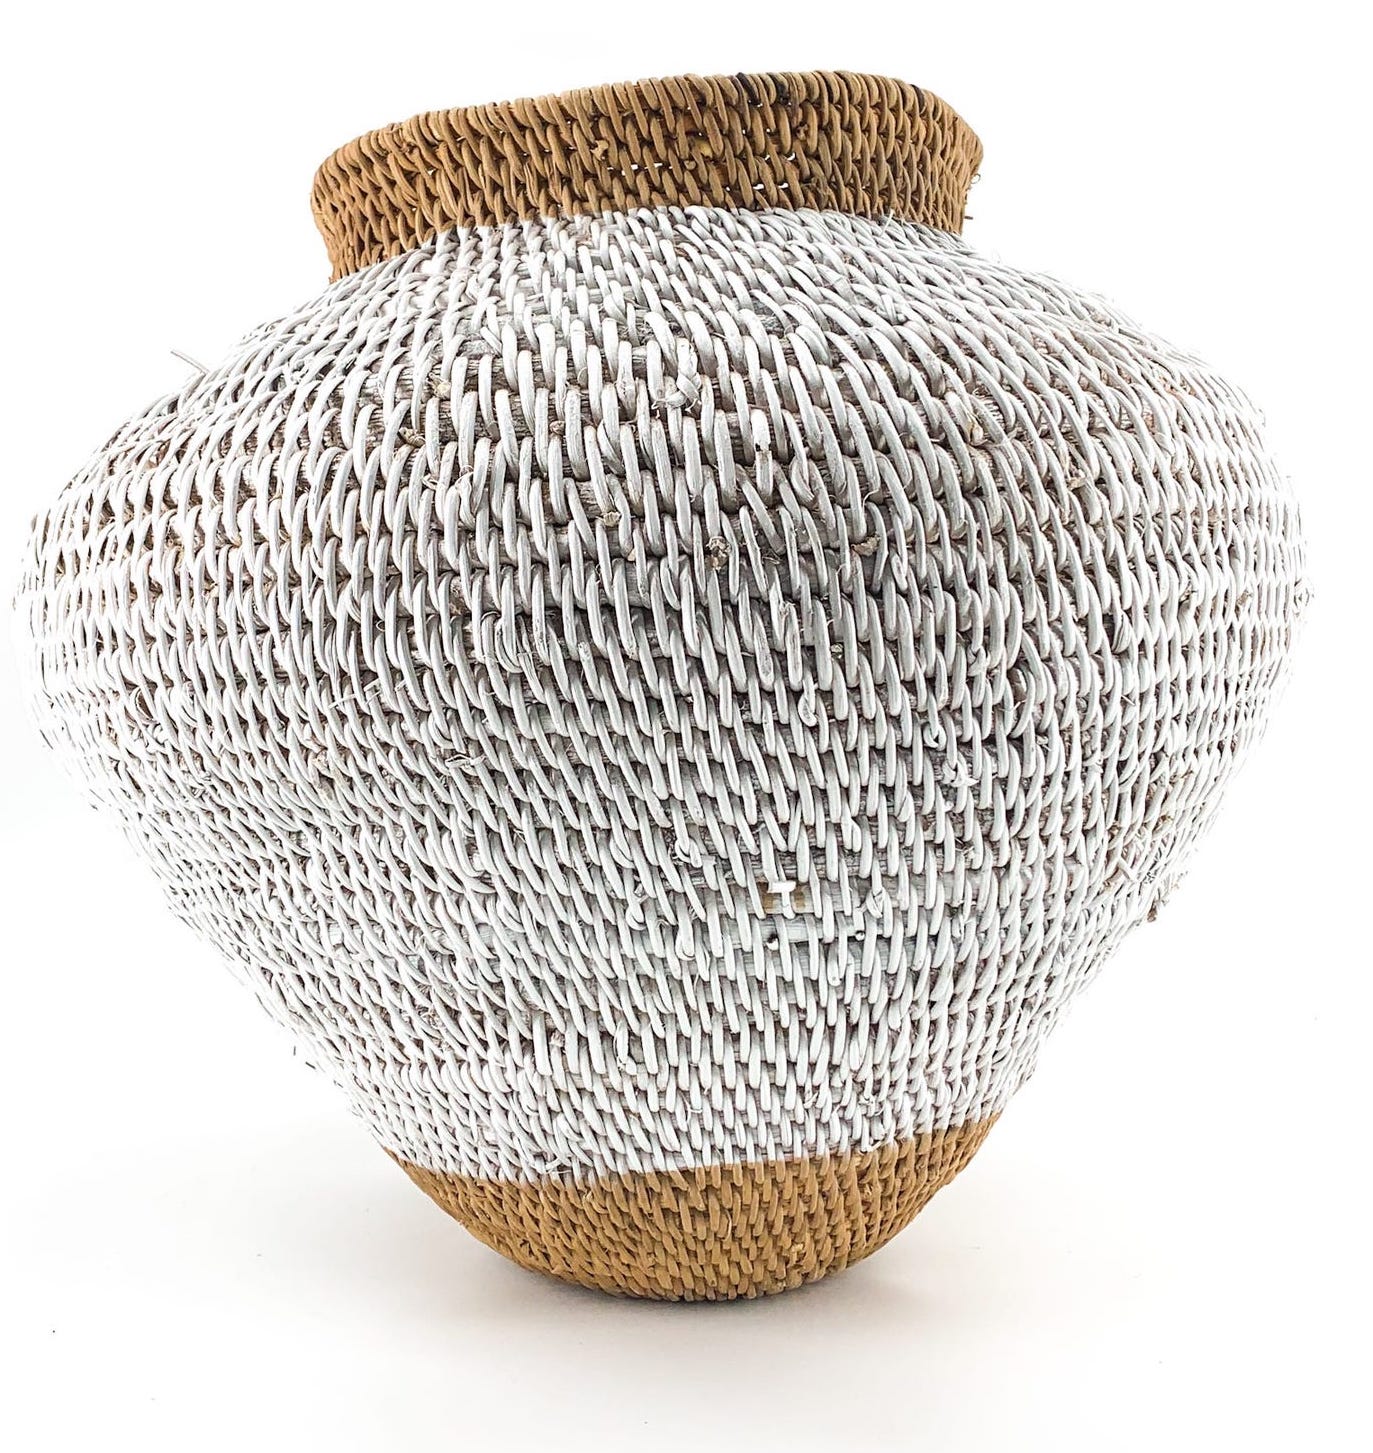 Buhera basket with natural-white stripes